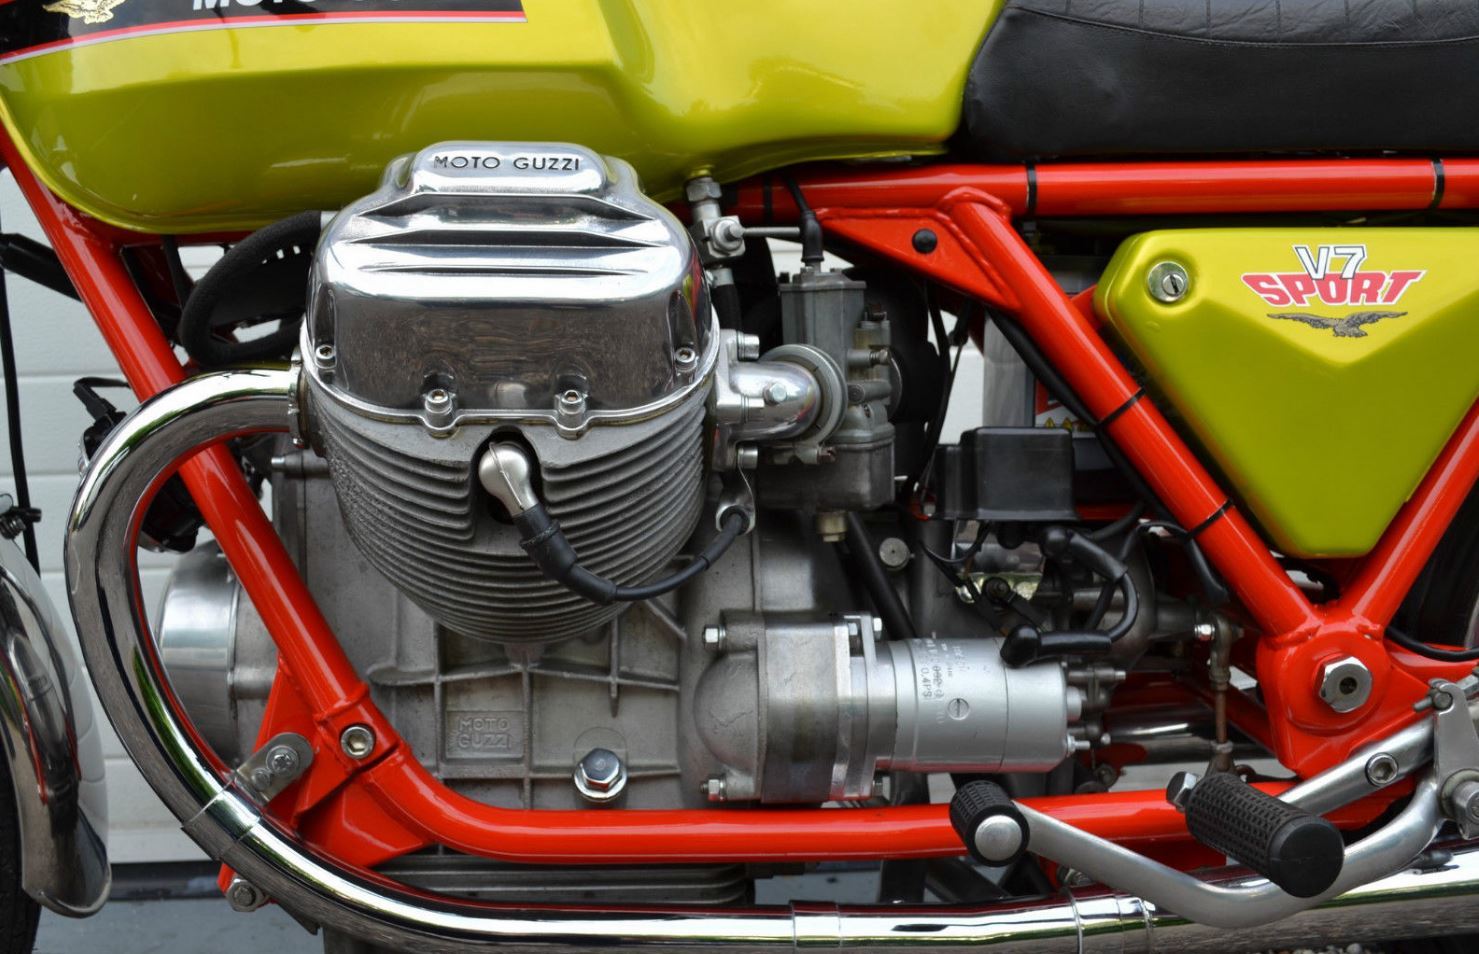 Moto guzzi engine serial numbers